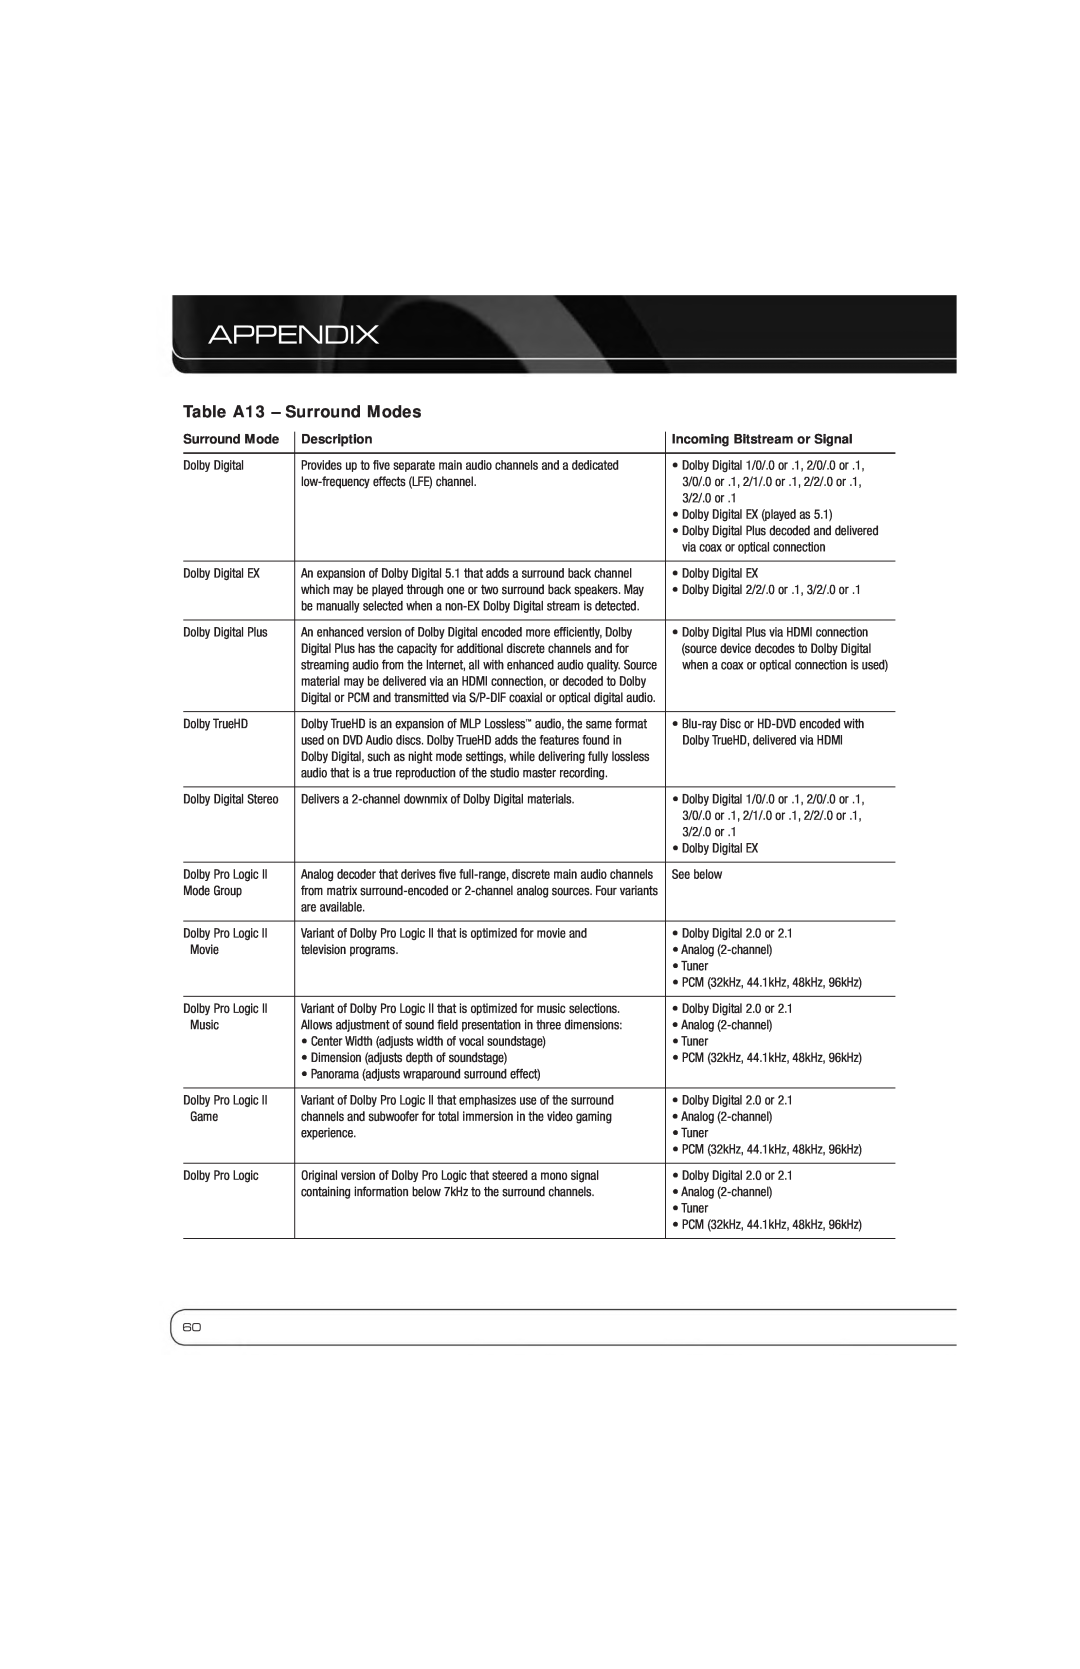 Harman-Kardon AVR 7550HD owner manual Table A13 - Surround Modes, Appendix, Description, Incoming Bitstream or Signal 